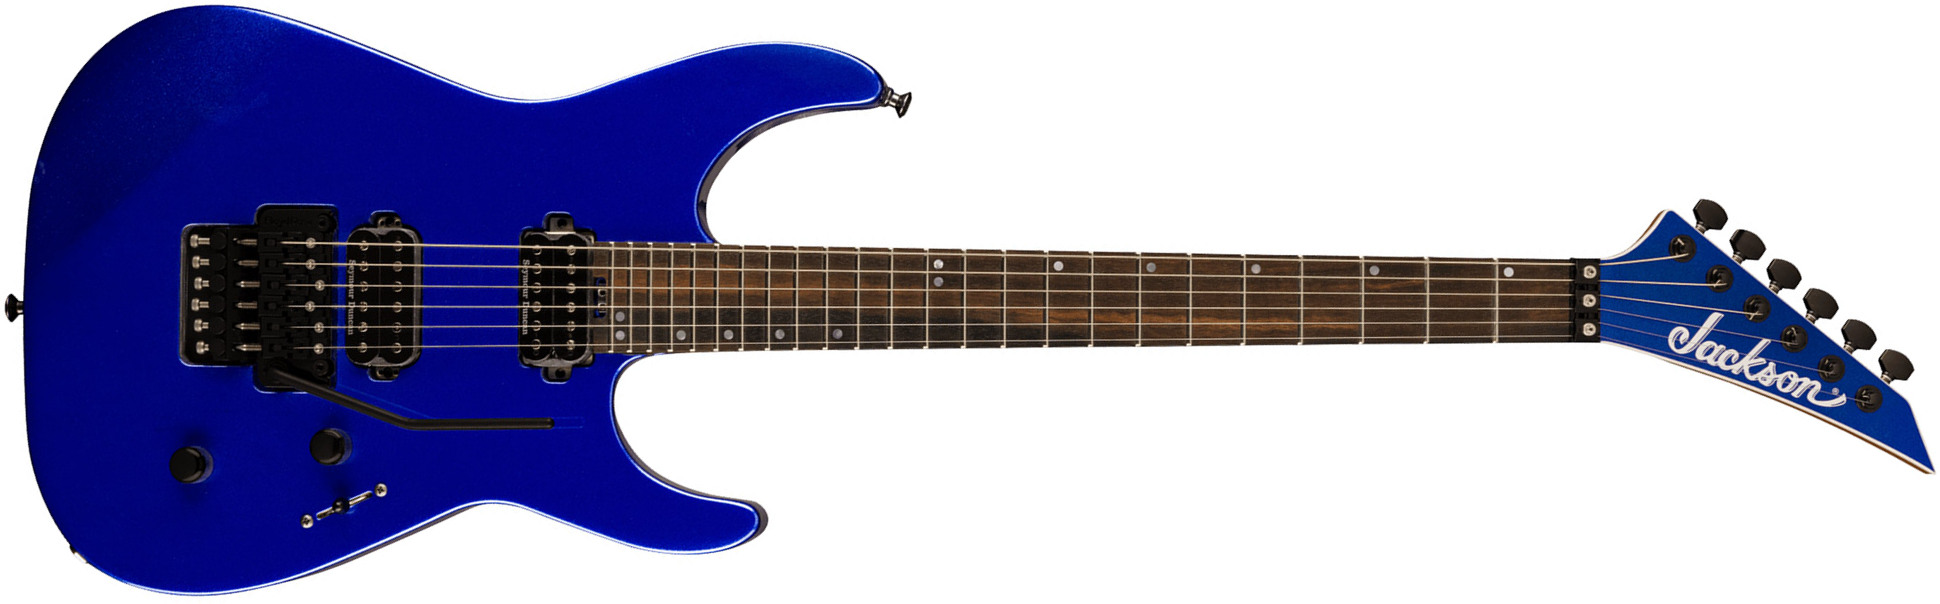 Jackson American Virtuoso 2h Seymour Duncan Fr Eb - Mystic Blue - Str shape electric guitar - Main picture